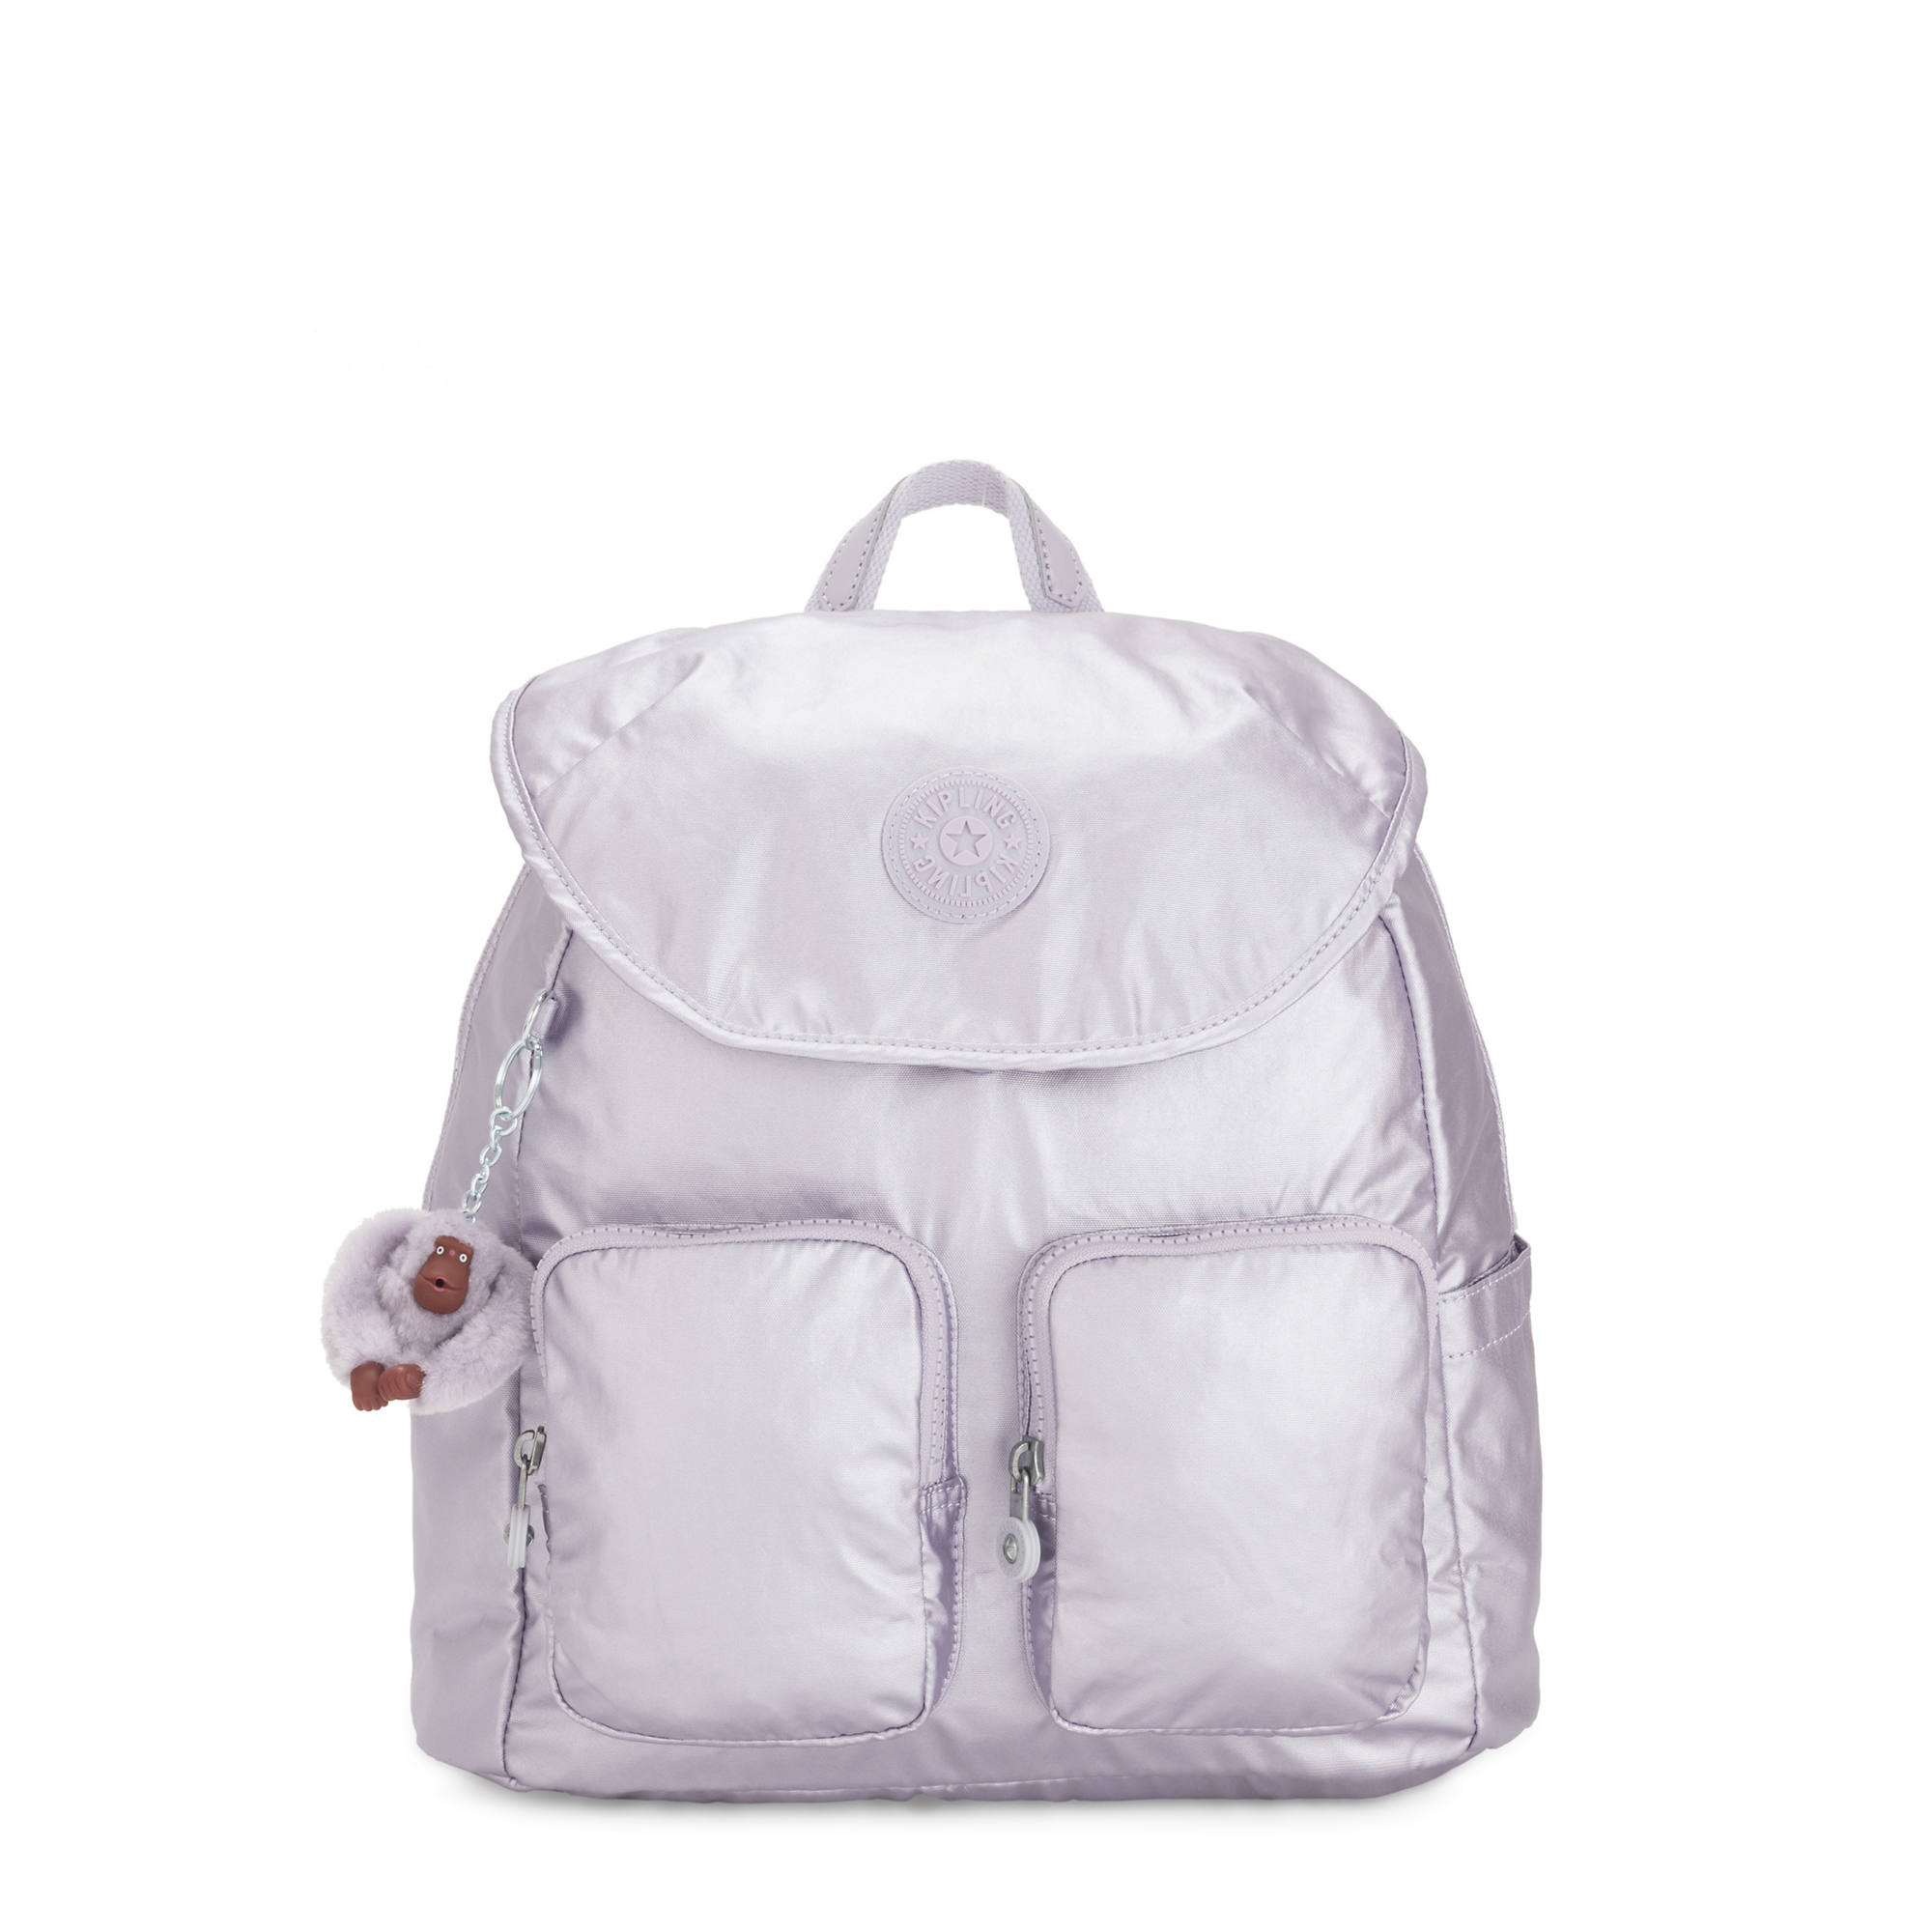 Kipling Fiona Medium Metallic Backpack Frosted Lilac Metallic | eBay